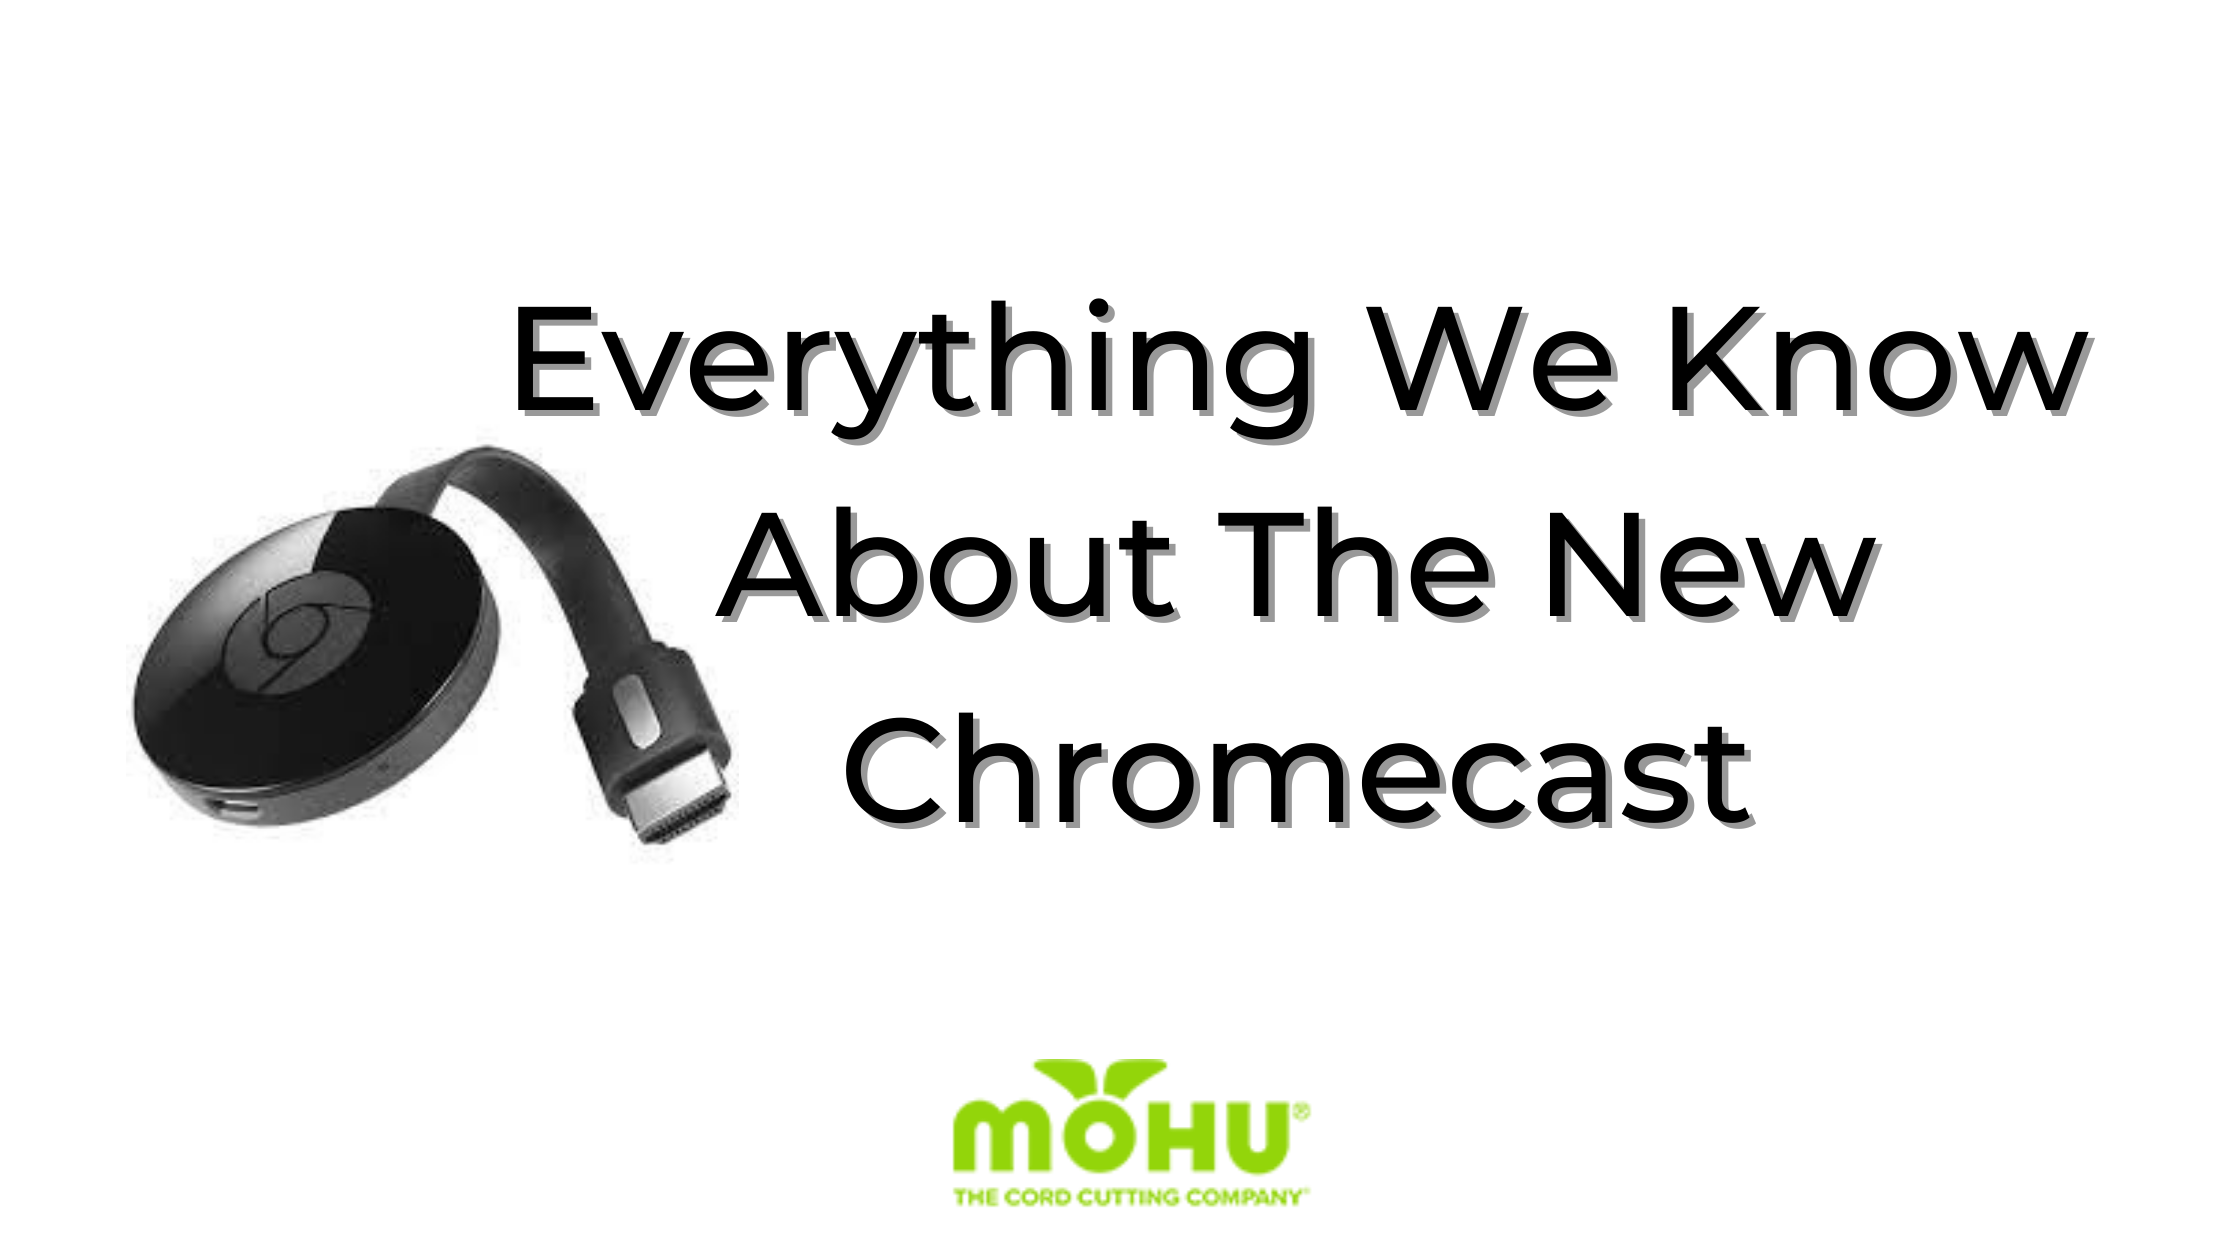 Image of Chromecast 2.0, Everything We Know About The New Chromecast, Mohu logo